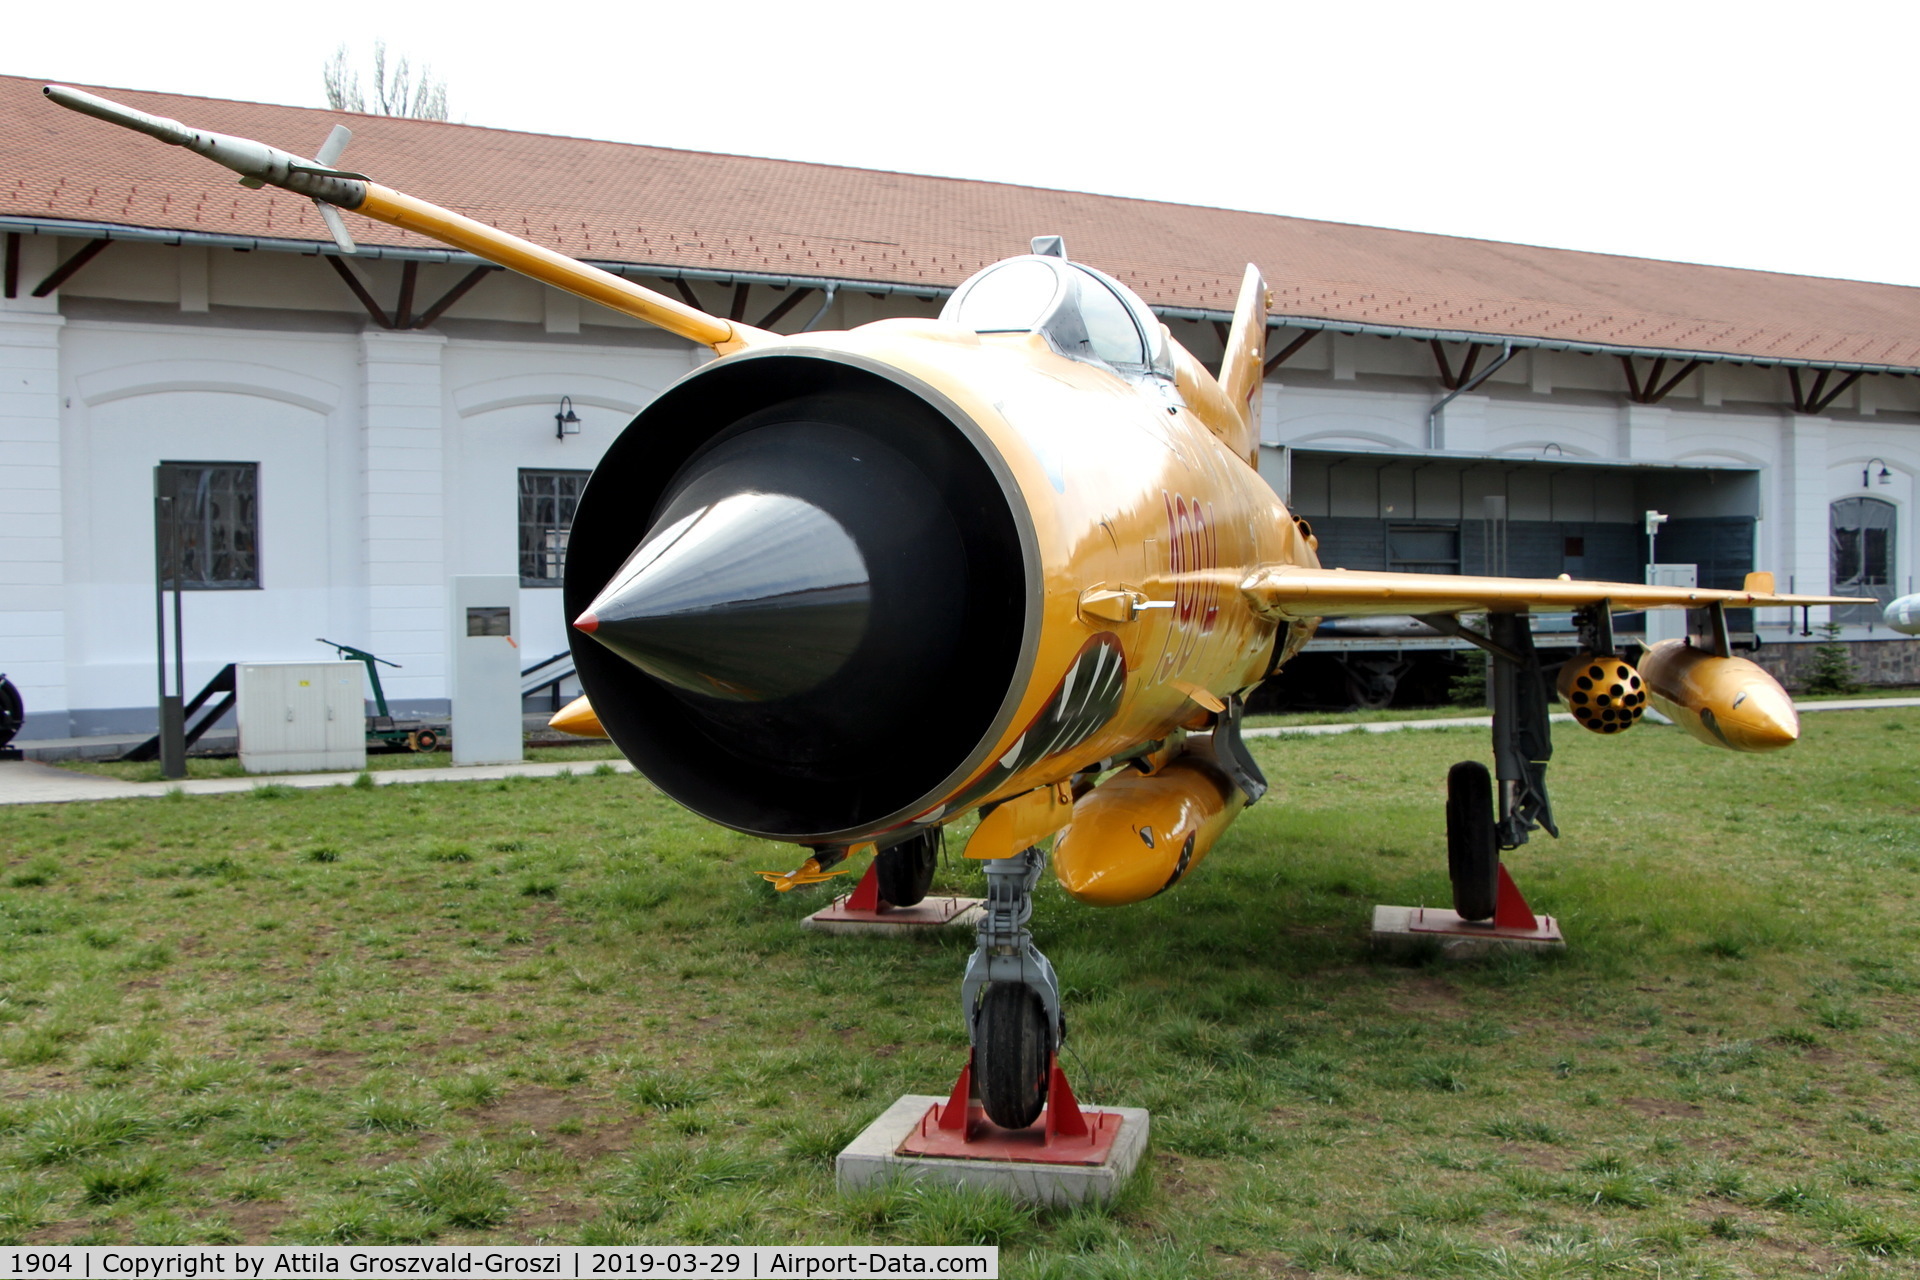 1904, 1978 Mikoyan-Gurevich MiG-21bis C/N 75061904, RepTár. Szolnok aviation history museum, Hungary